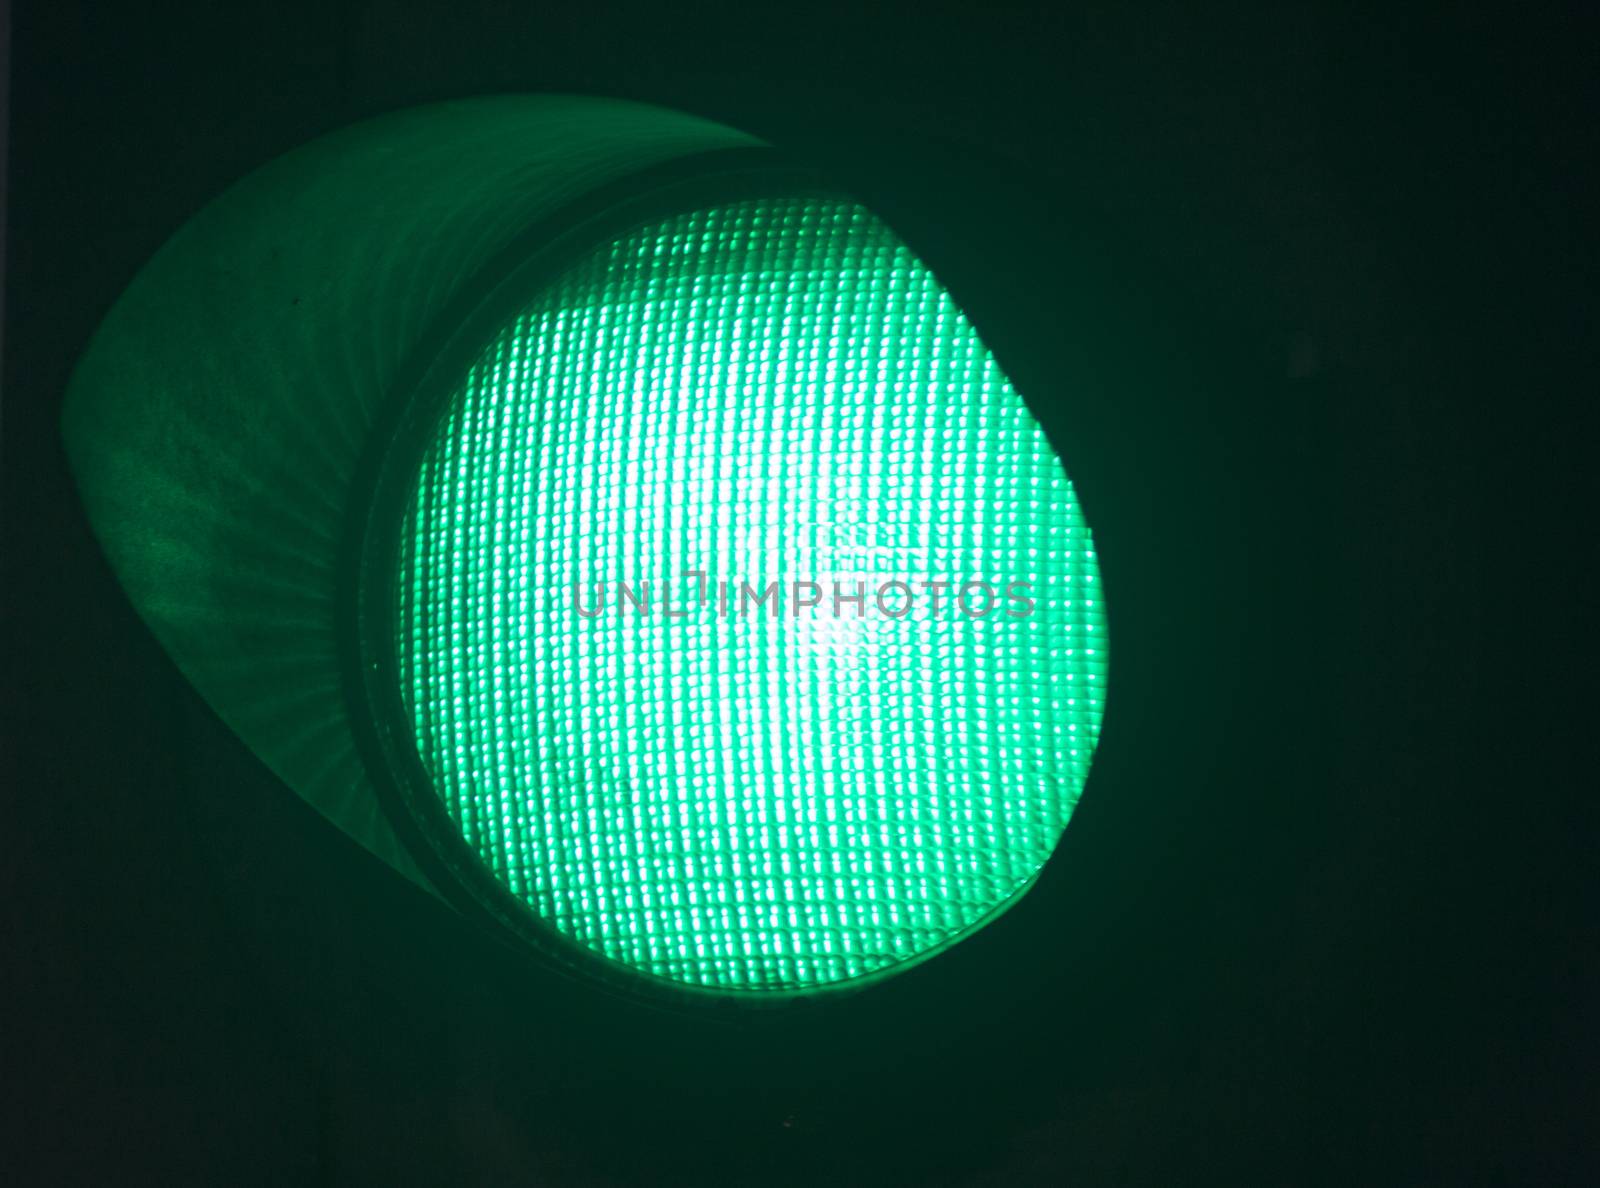 Traffic green go light photo at night on black background.